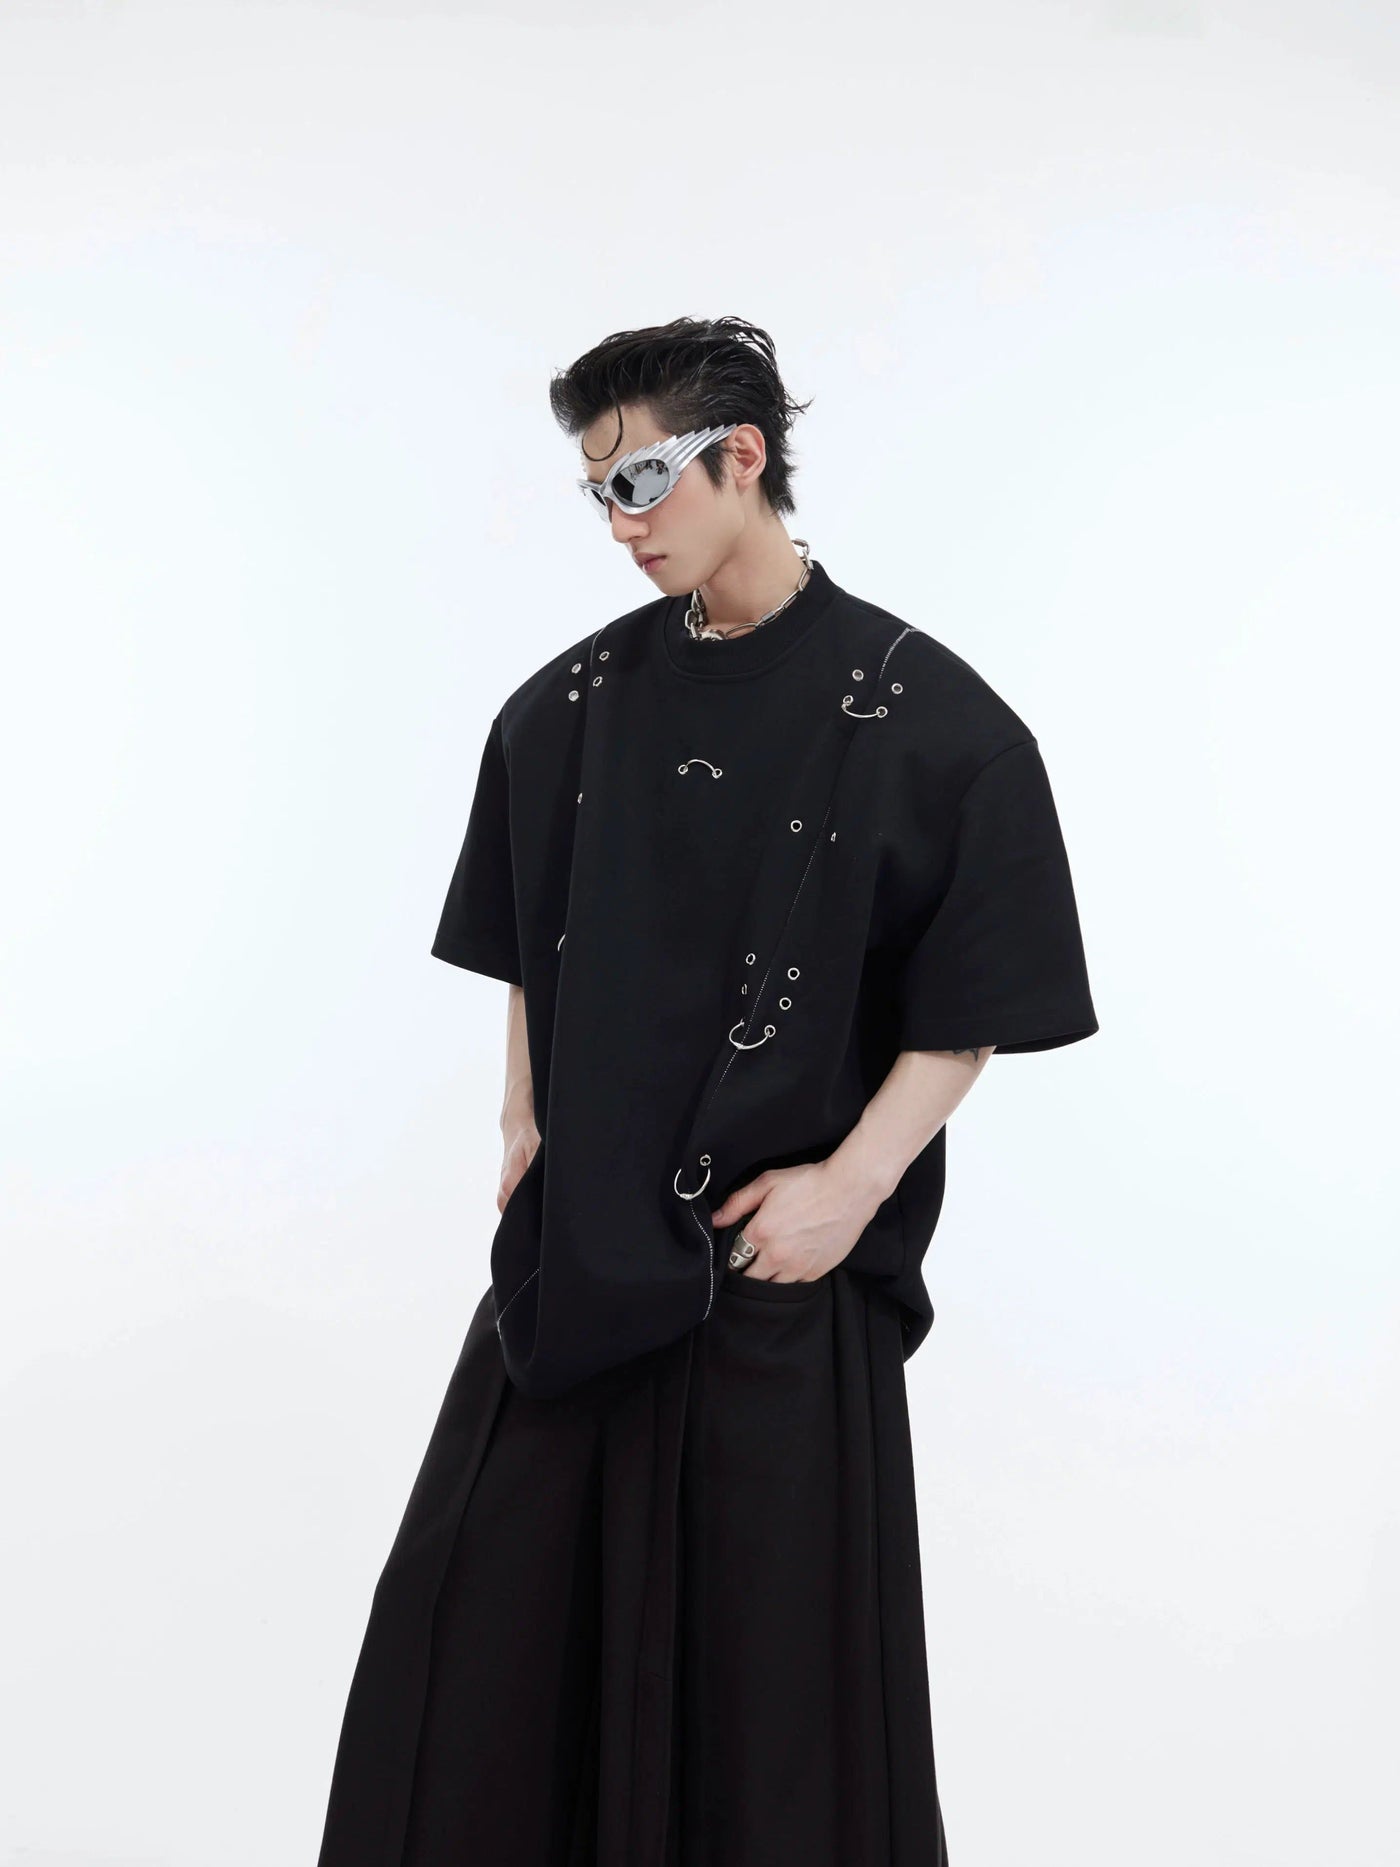 Metal Accent Shoulder Pad T-Shirt Korean Street Fashion T-Shirt By Argue Culture Shop Online at OH Vault